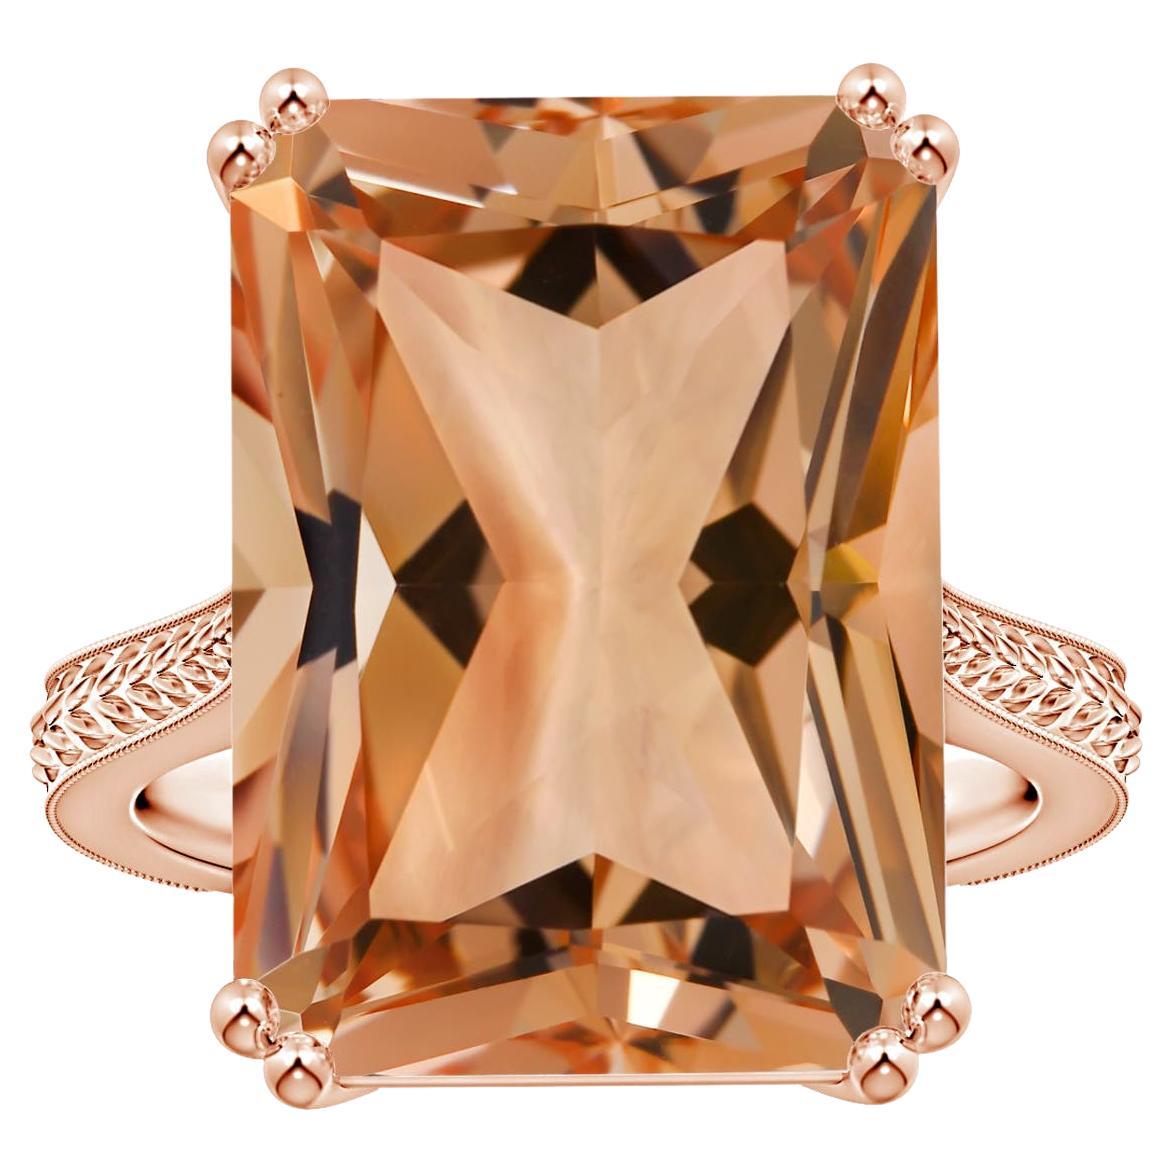 For Sale:  Angara Gia Certified Natural Solitaire Emerald-Cut Morganite Ring in Rose Gold